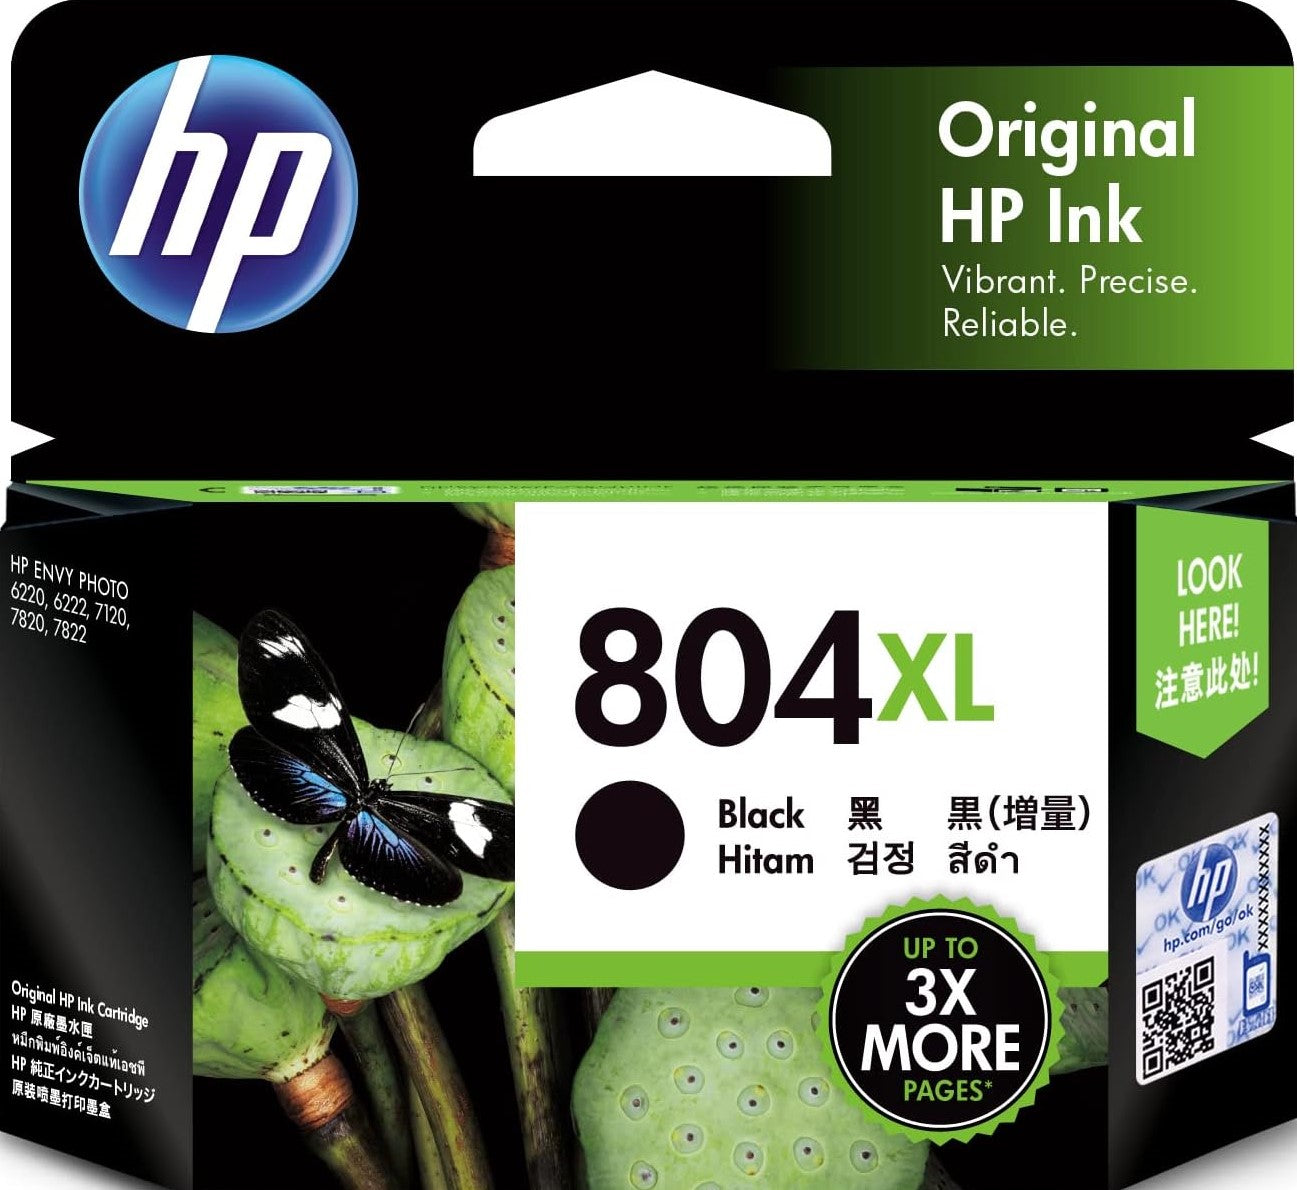 804XL HP High Capacity Black Cartridge